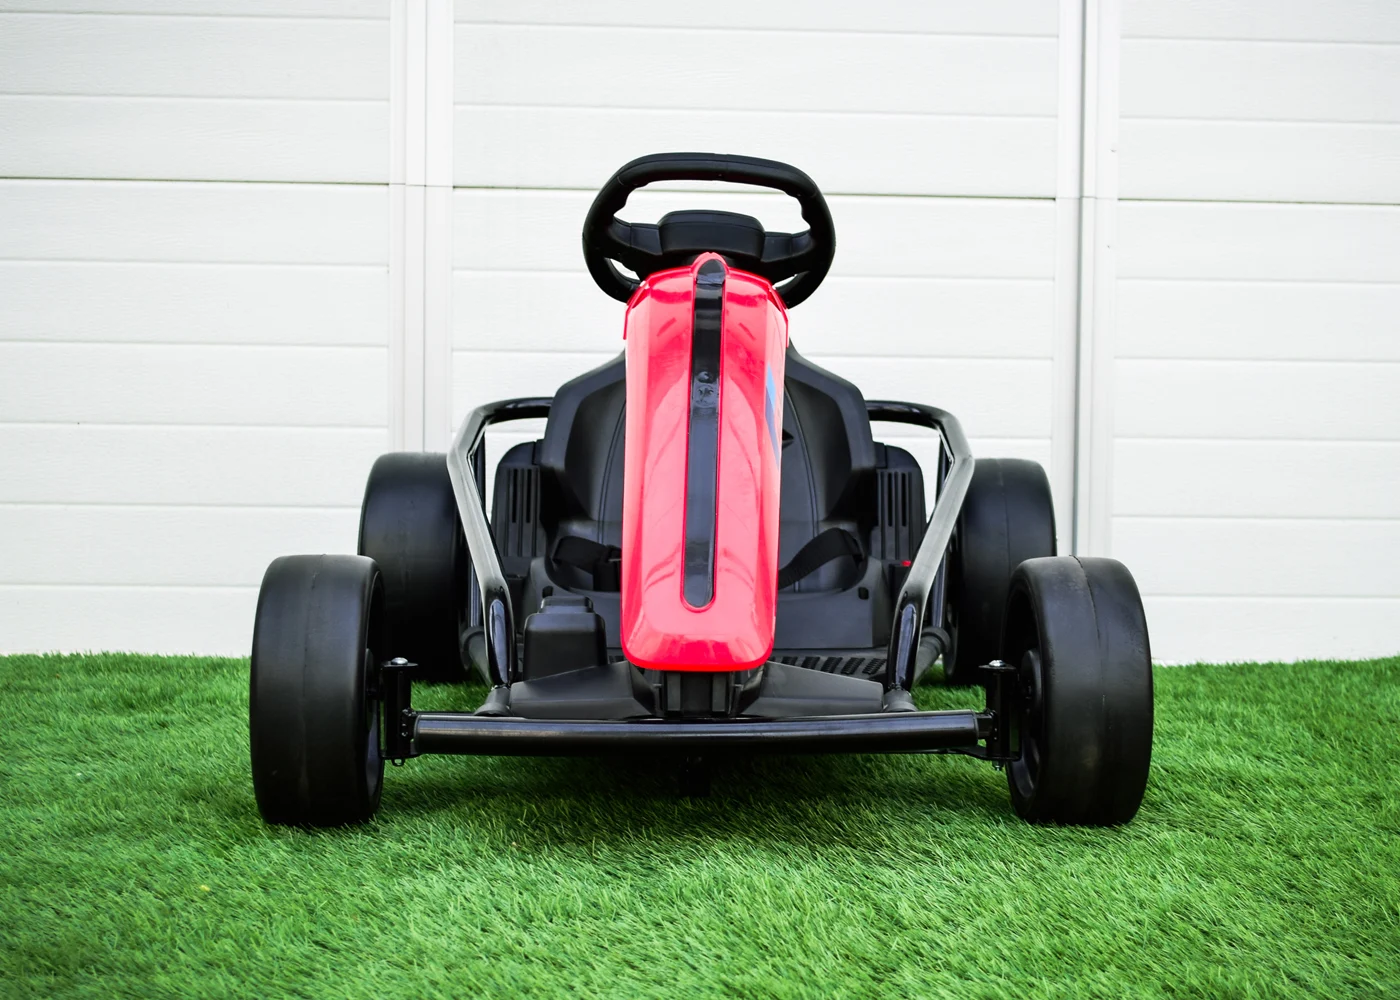 Electric ride-on kart for children, drift function, 500W